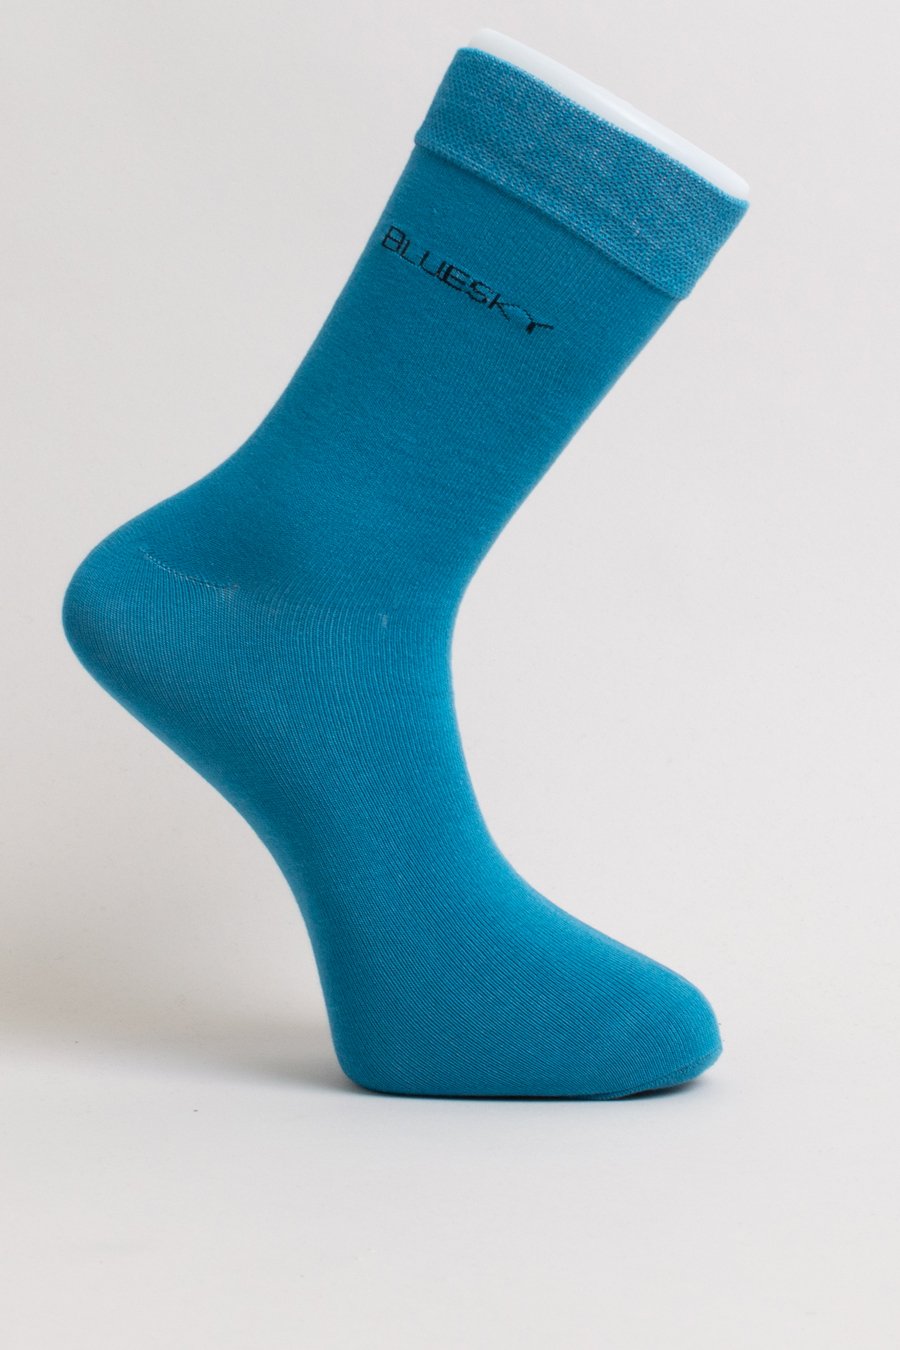 mens teal dress socks